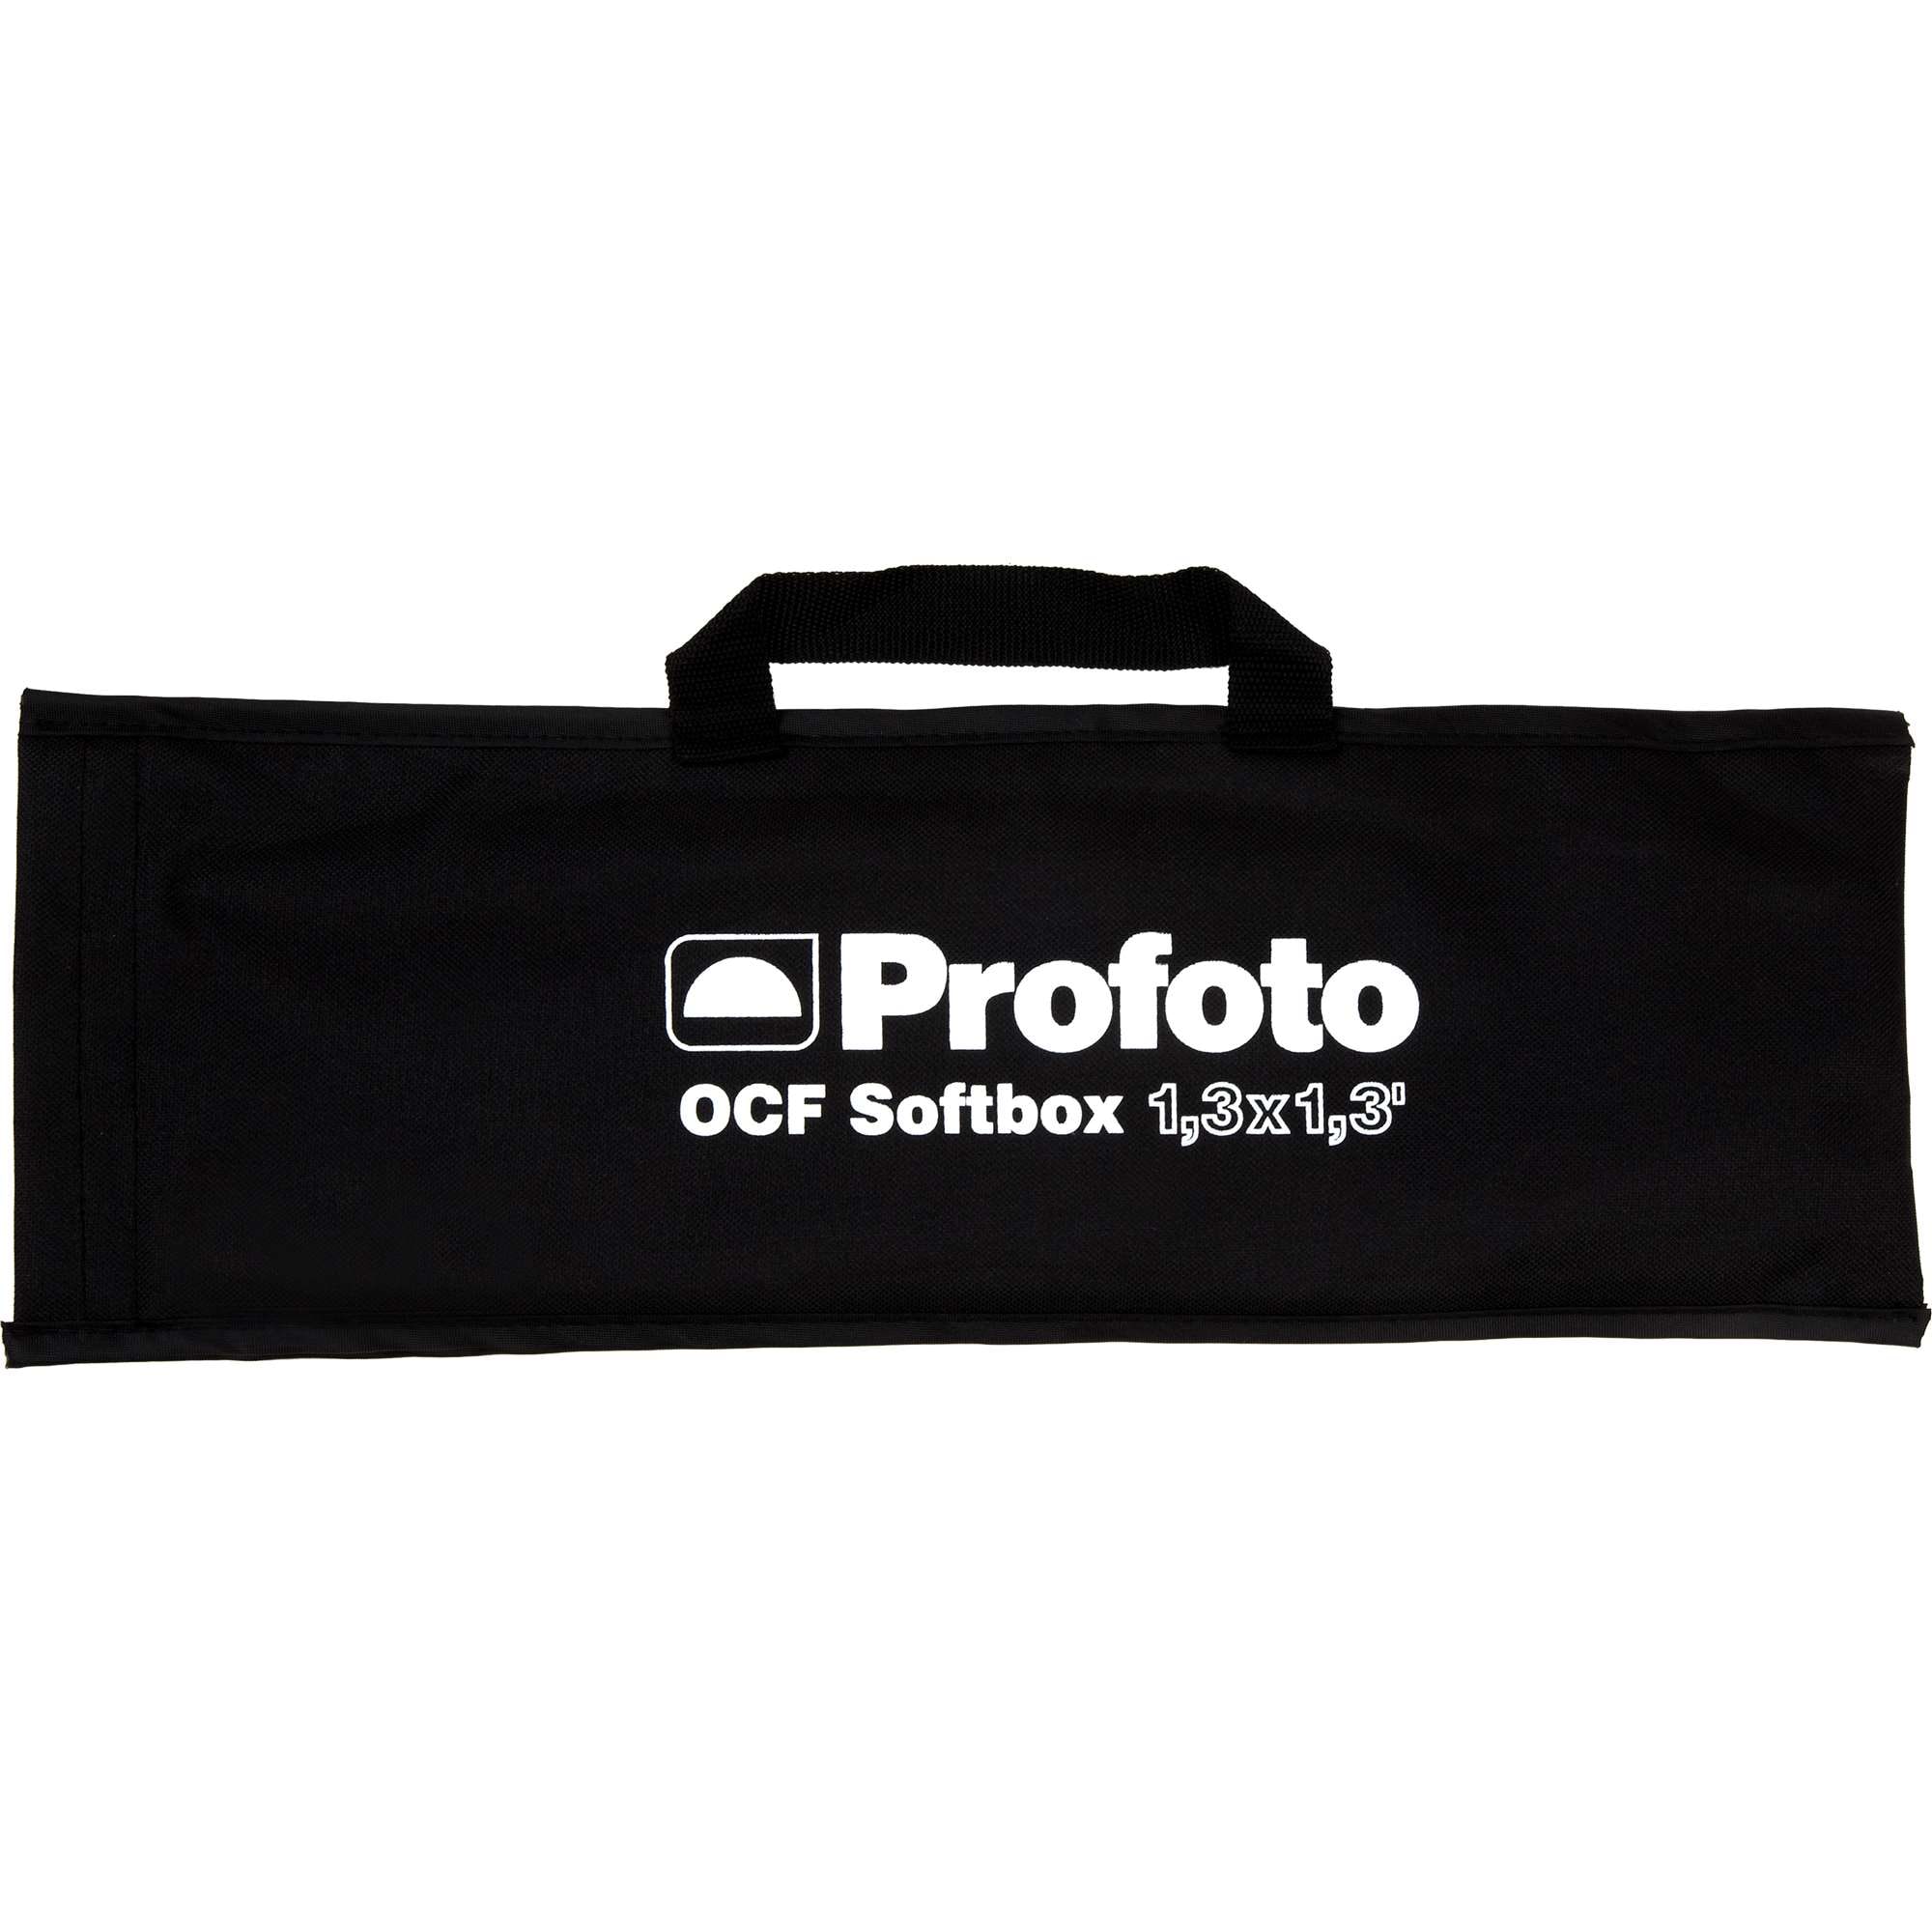 Profoto OCF Softbox 1.3x1.3'